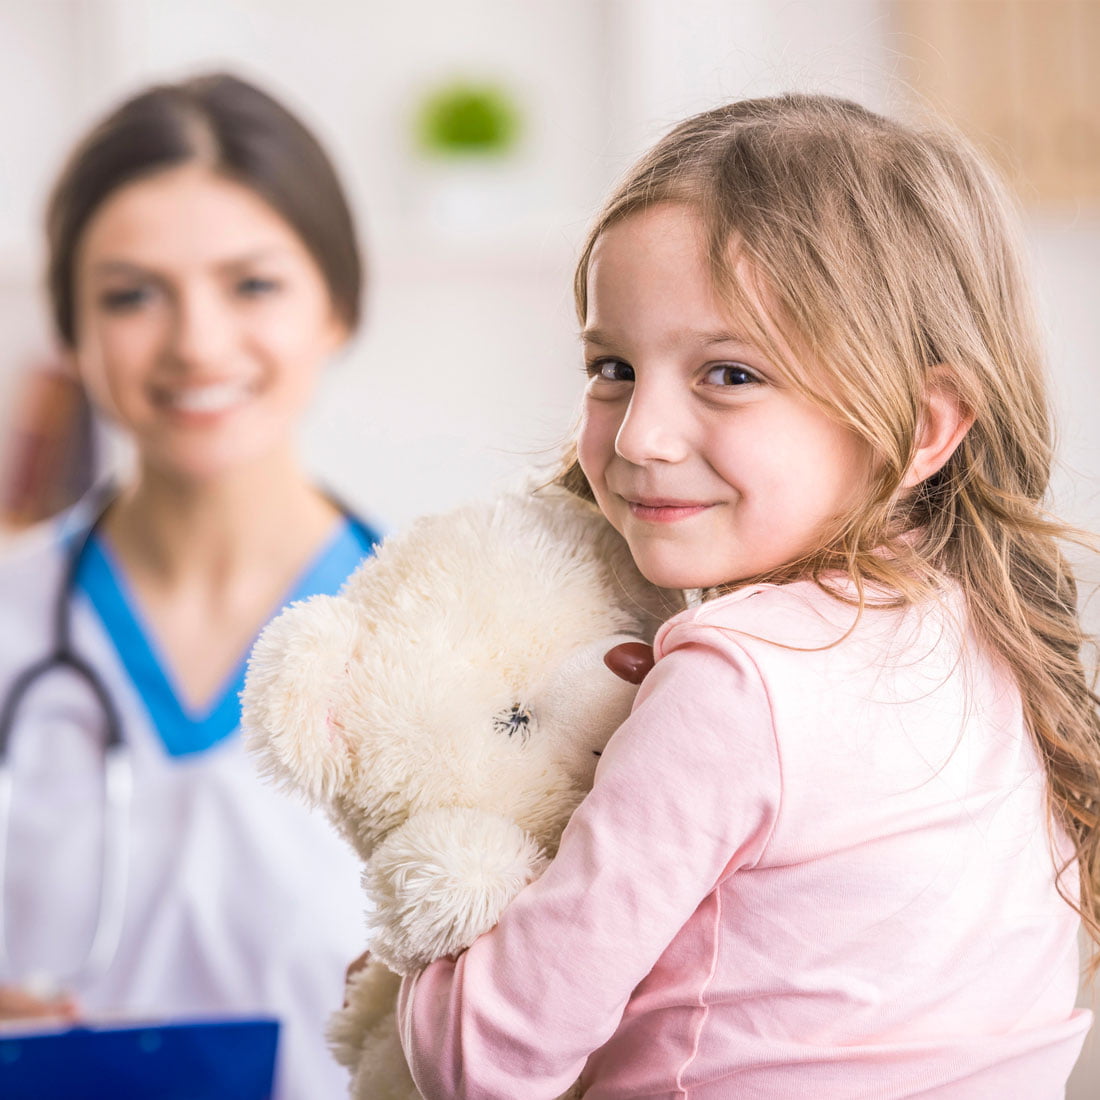 Pediatric Urgent Care Centre | Happy Child with the treatment